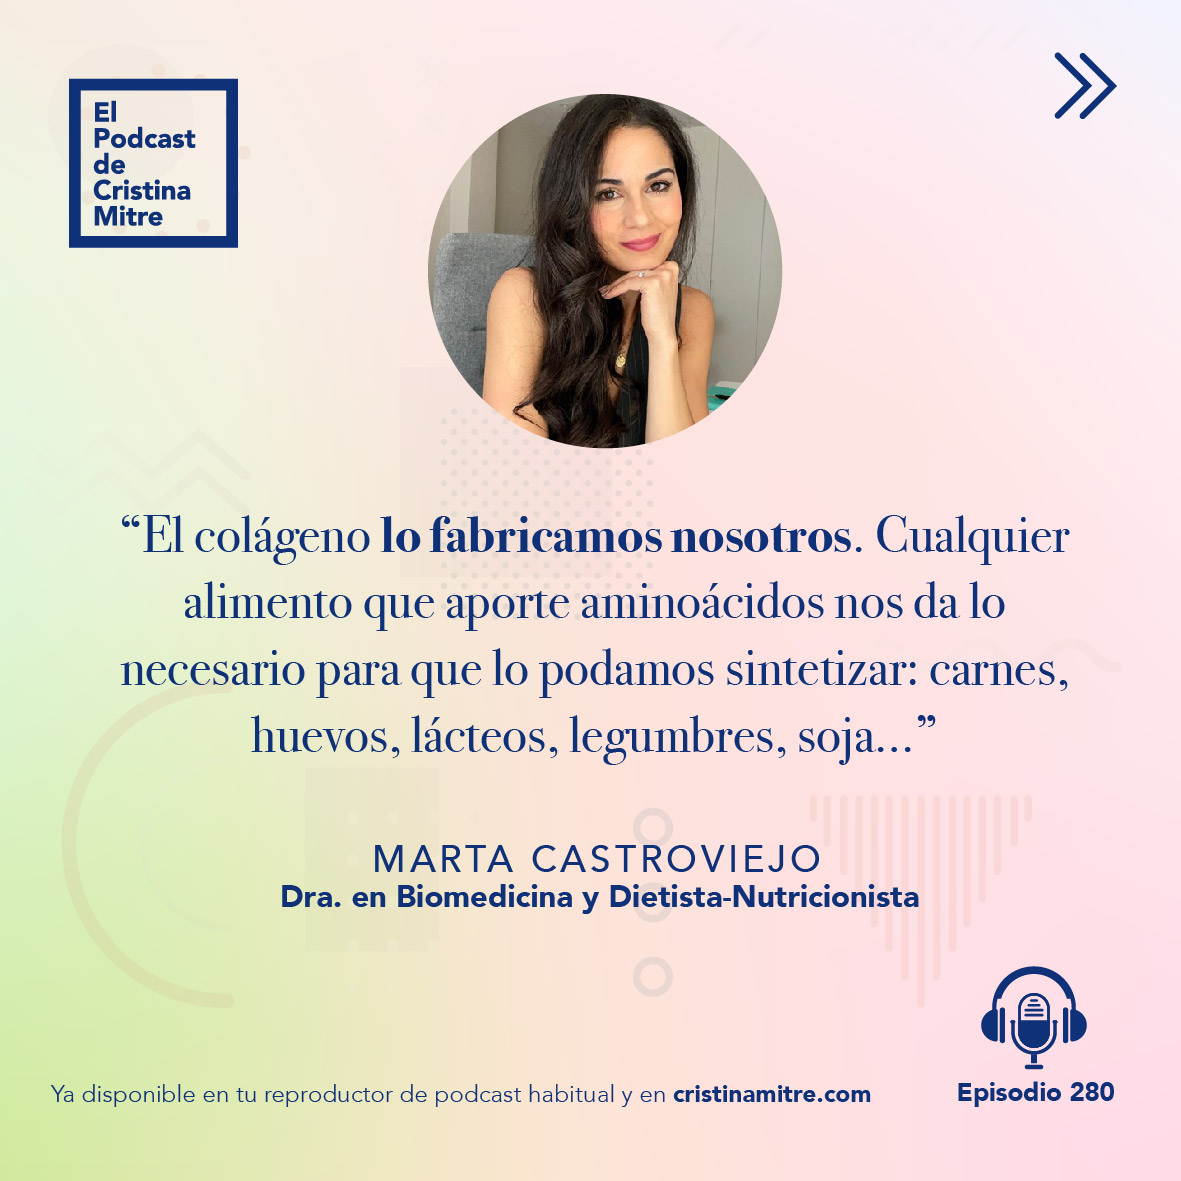 El podcast de Cristina Mitre Colágeno Marta Castroviejo Natalia Jimenez